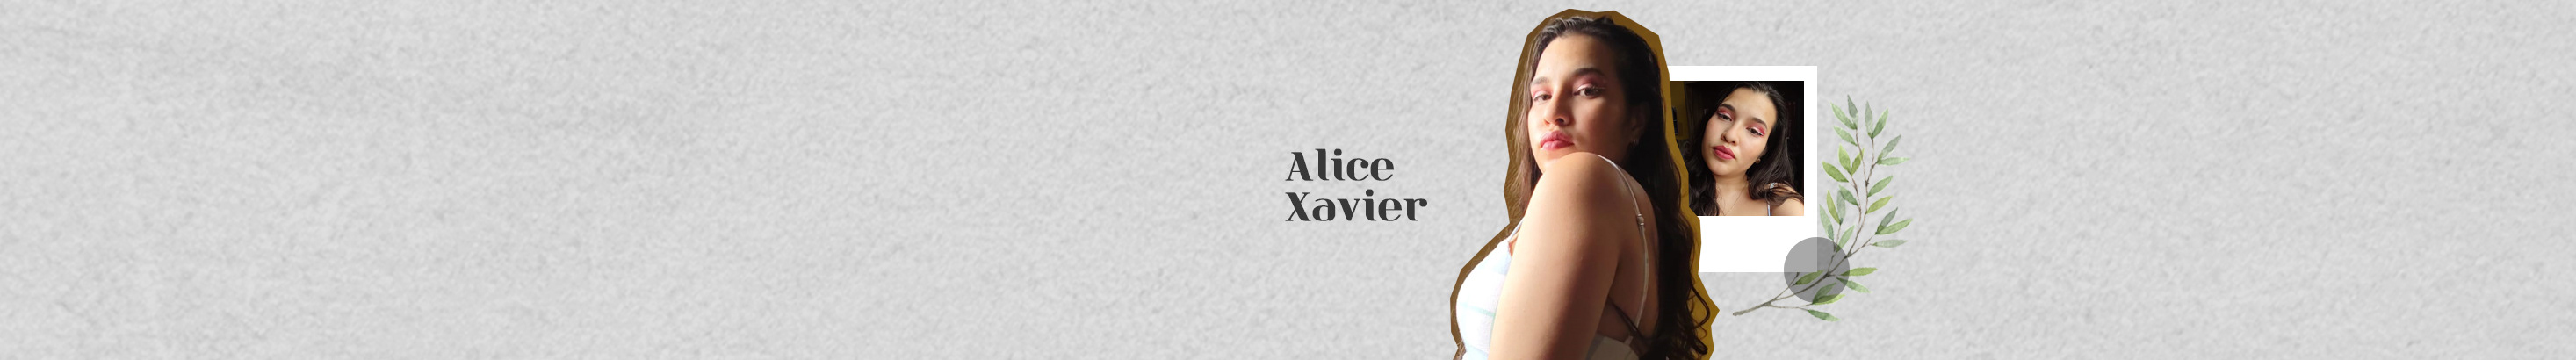 Alice Xaviers profilbanner